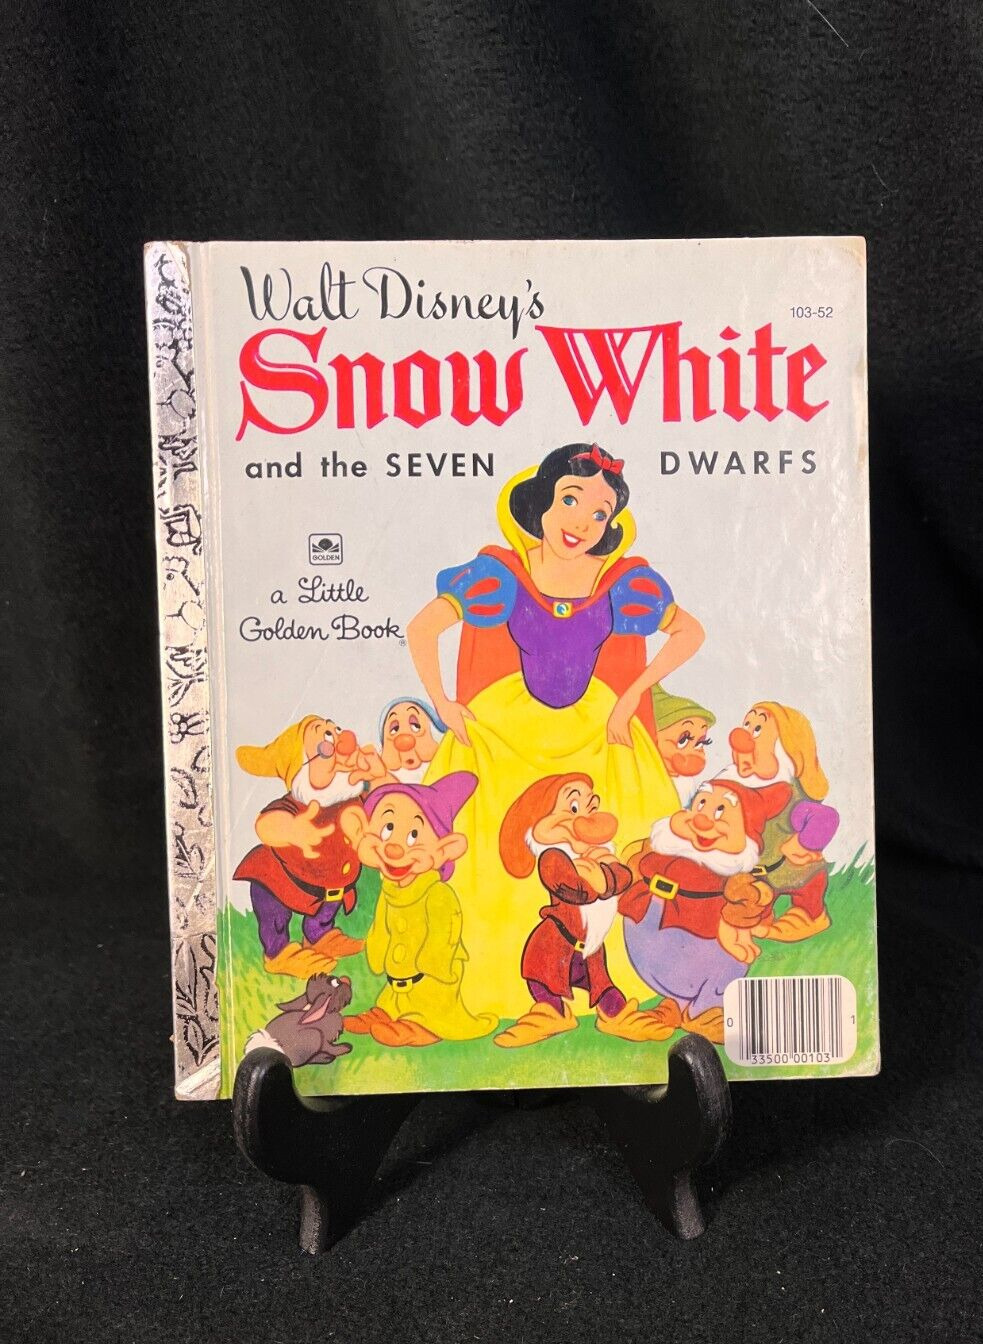 RARE FIND - SNOW WHITE and the SEVEN DWARFS - WALT DISNEY'S Little Golden Book